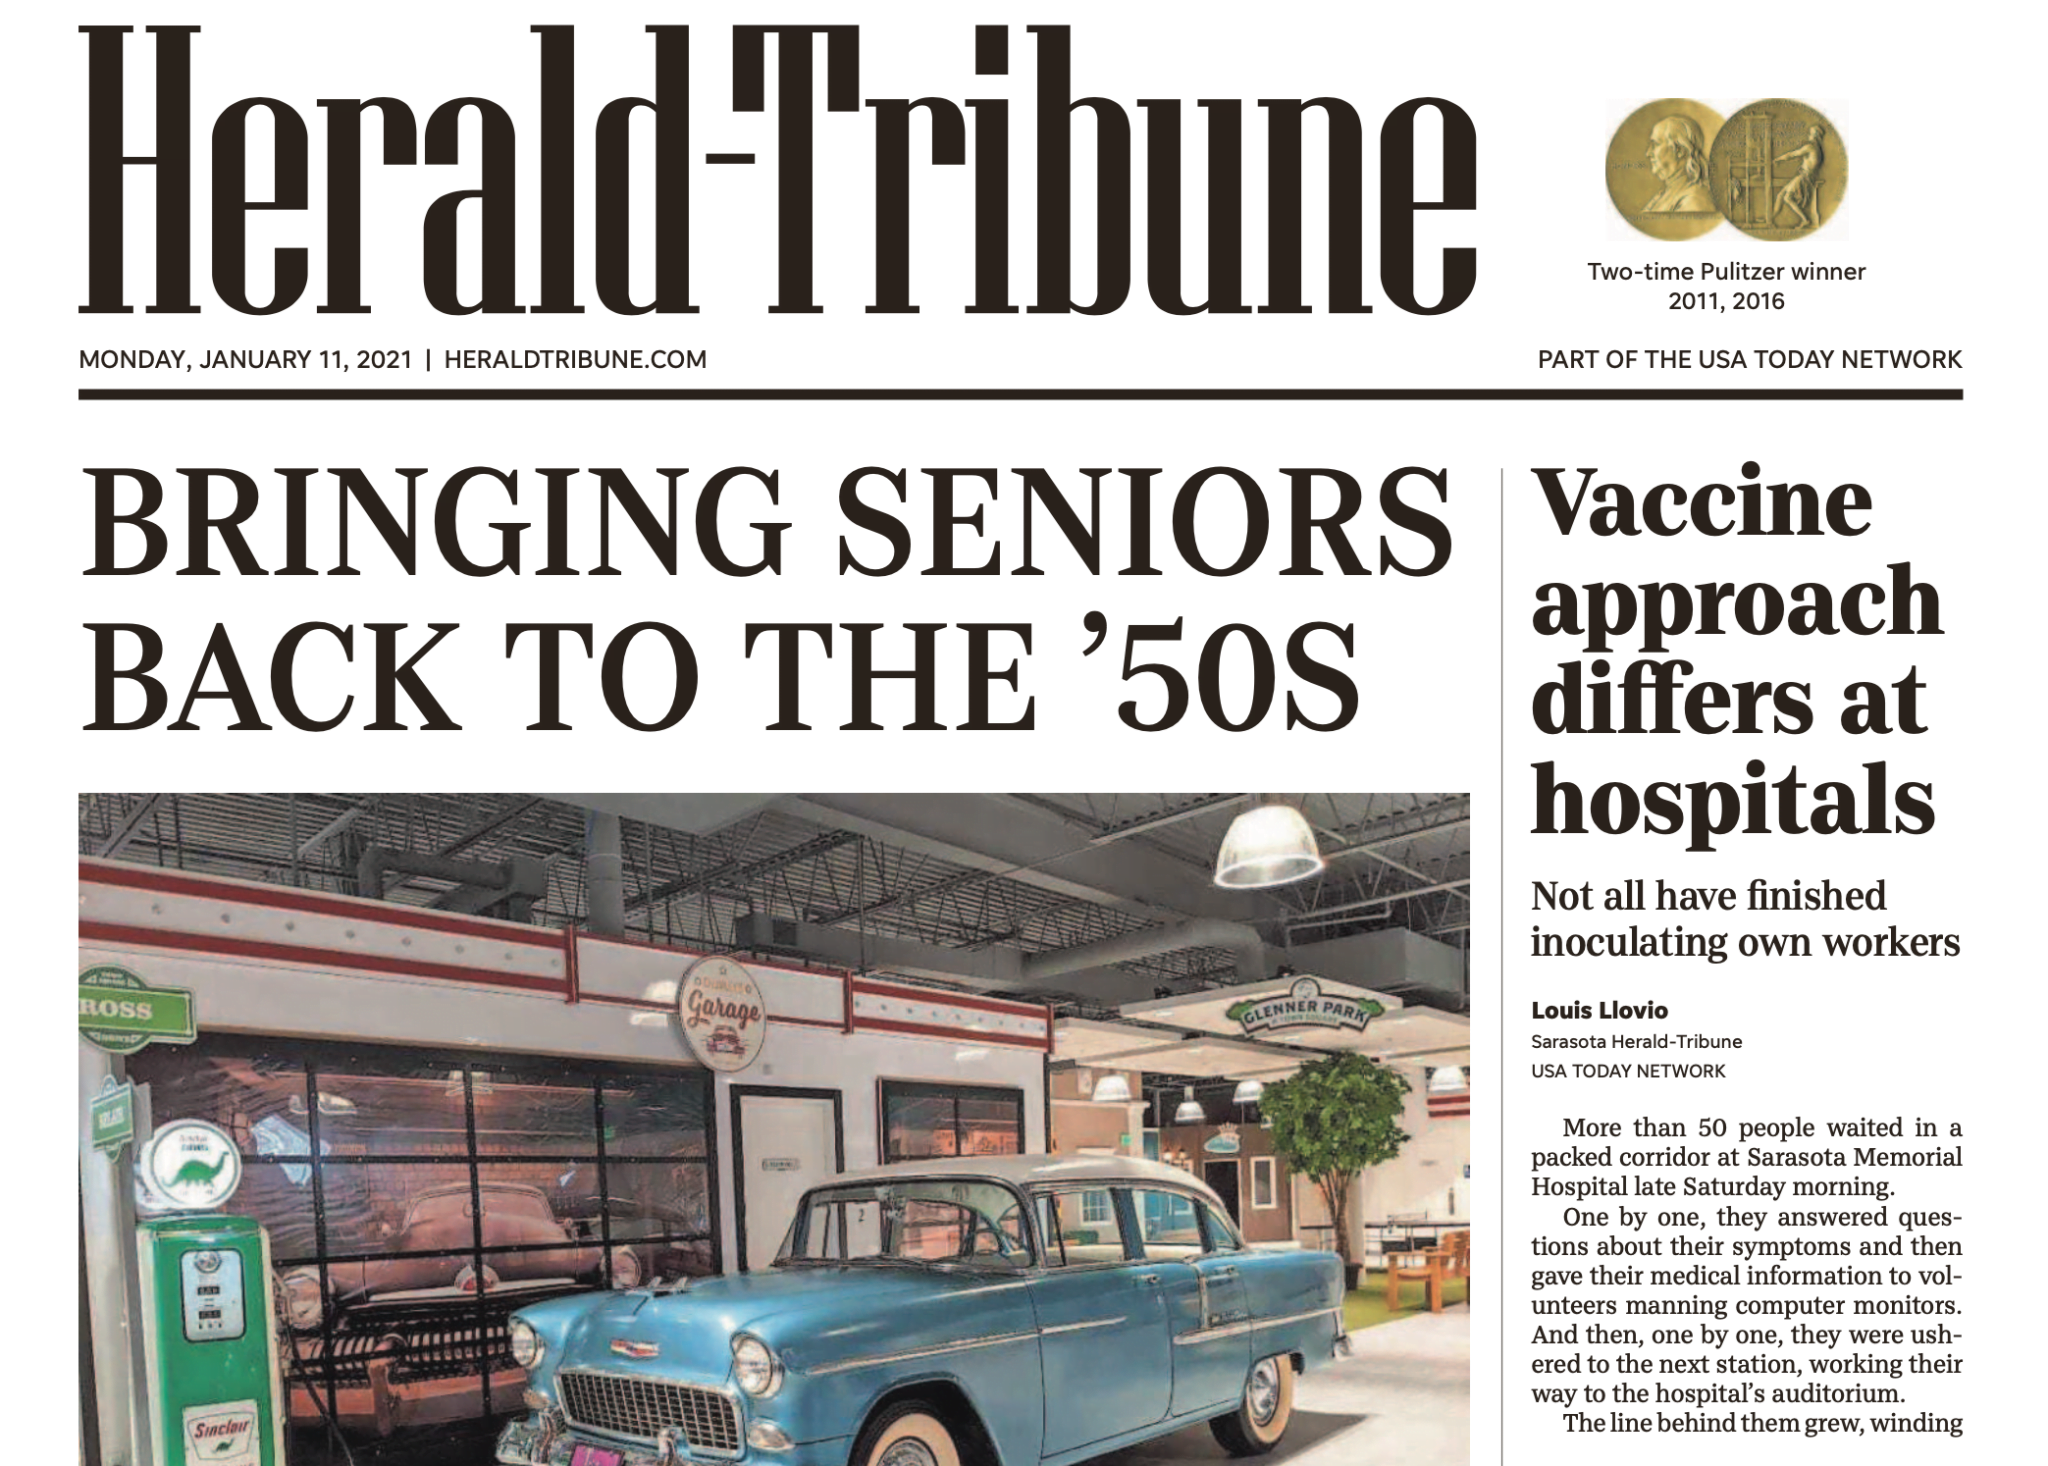 Frontpage story in HeraldTribune True Blue Communications